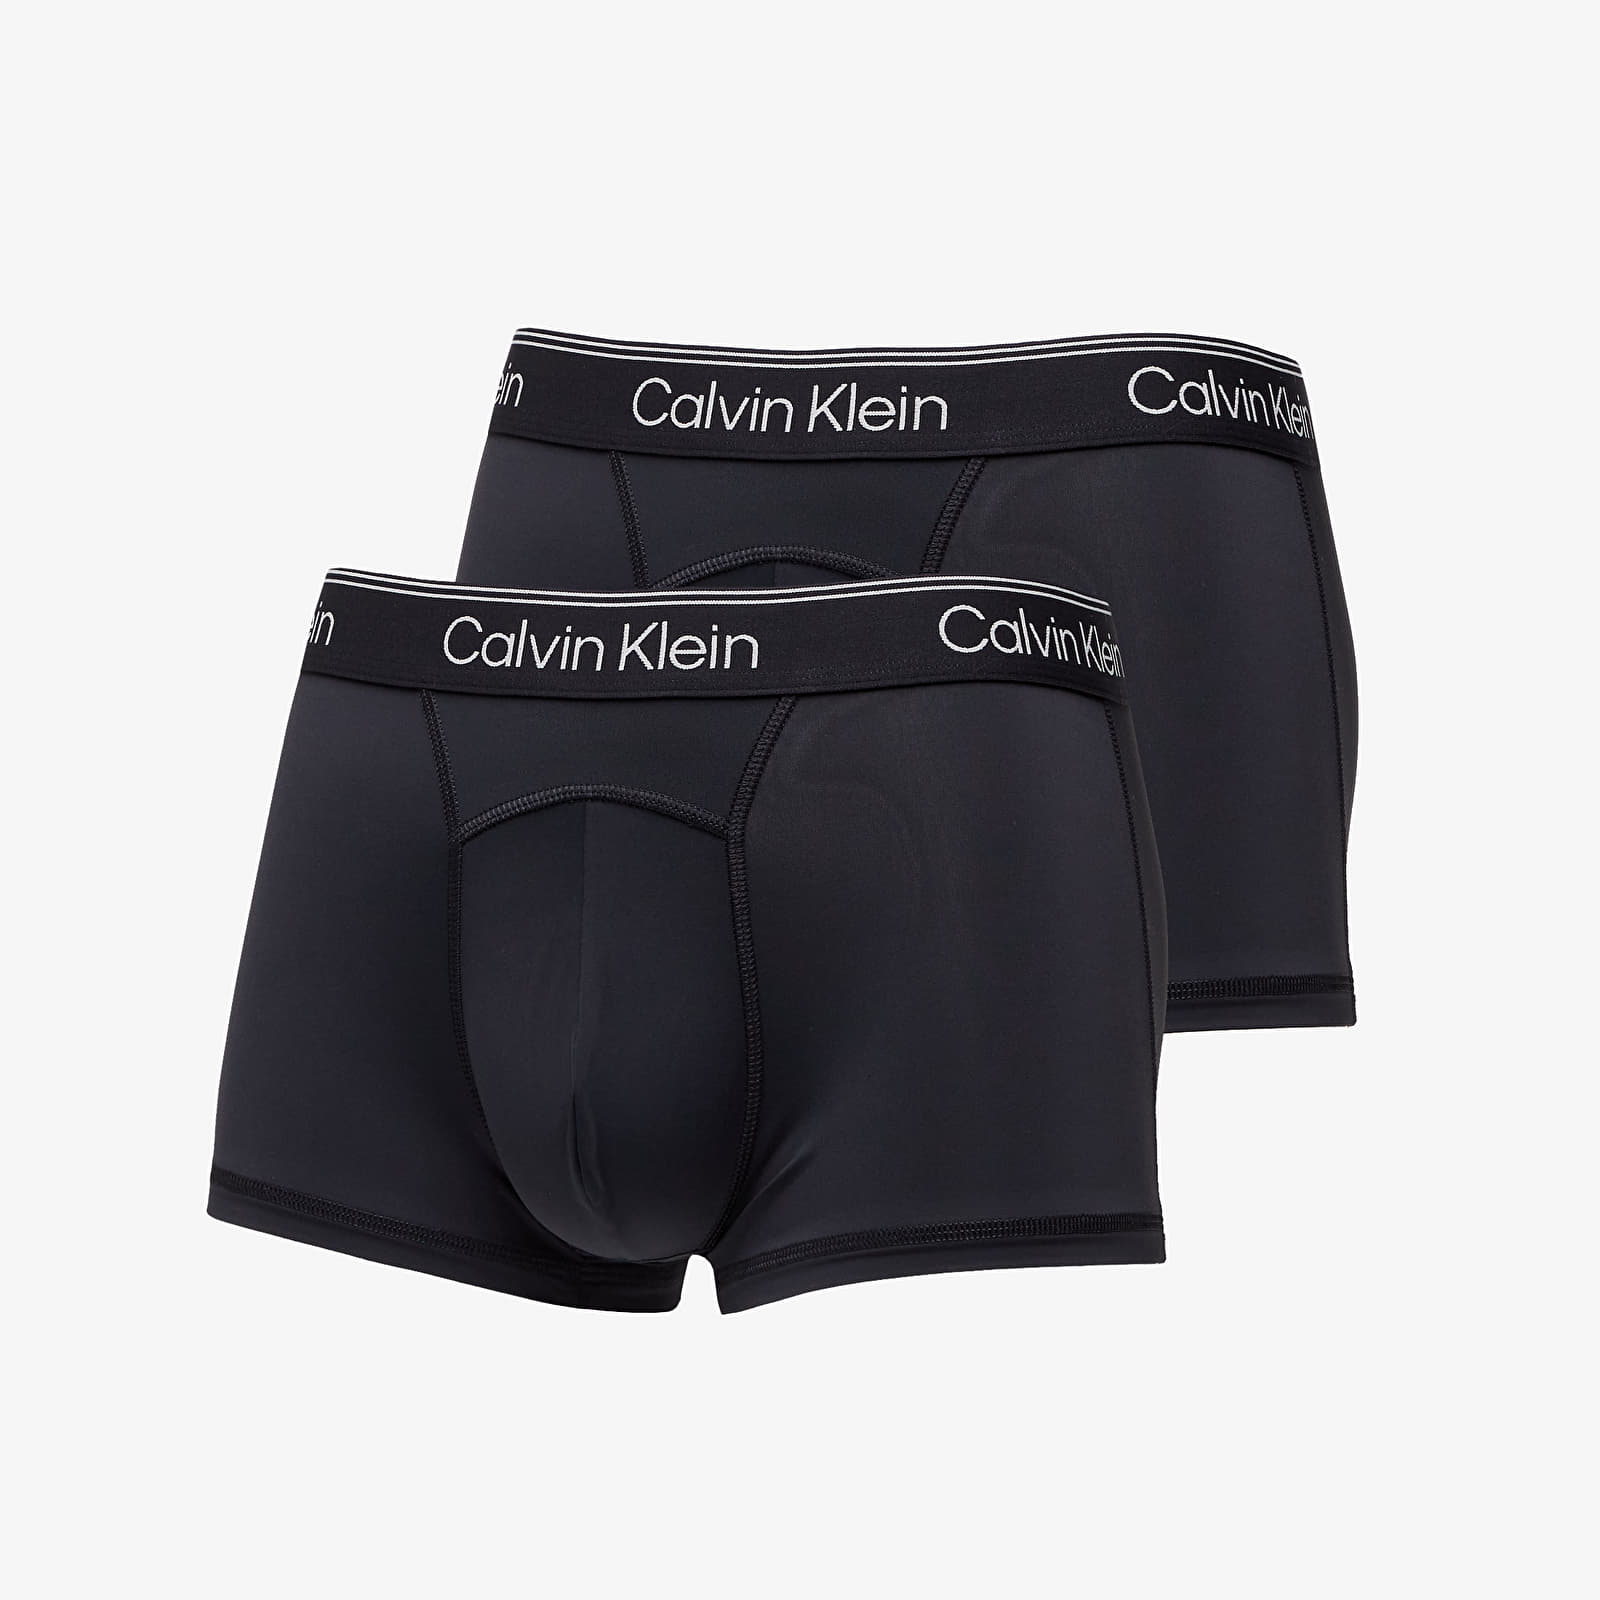 Document Ambassade Schepsel Boxer shorts Calvin Klein Athletic Microfiber Low Rise Trunk 2 Pack Black |  Queens